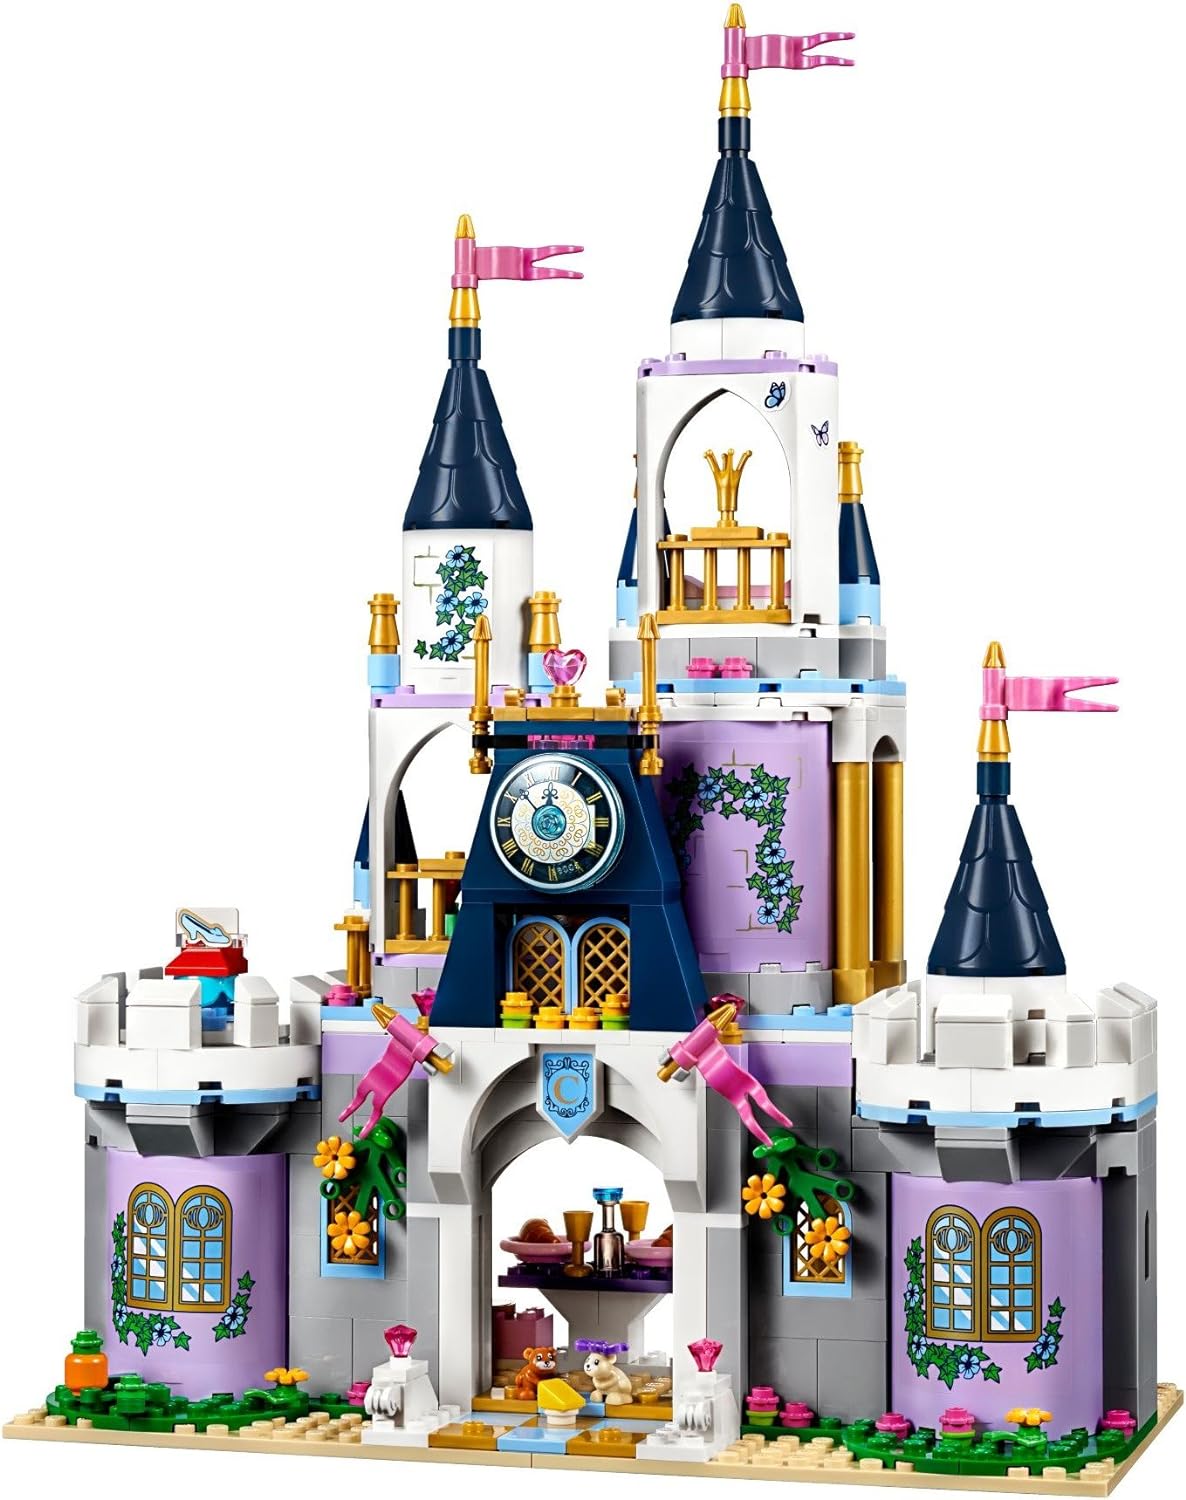 LEGO 41154 Disney Princess Cinderella's Dream Castle Toy, Fairytale Doll House, Prince Charming & Cinderella Mini Doll